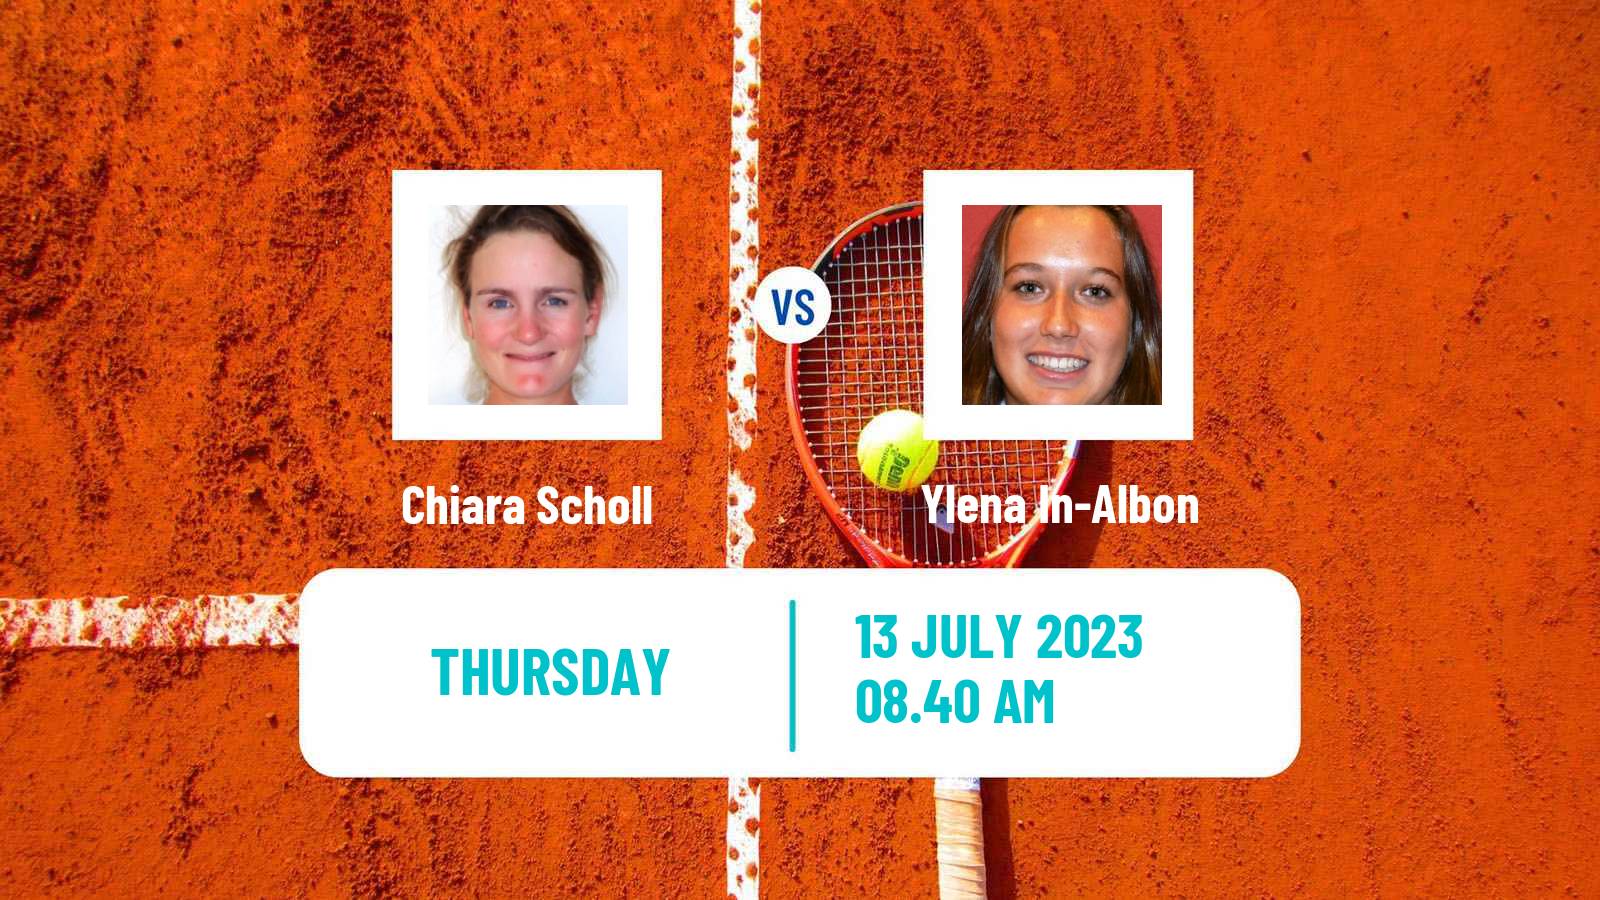 Tennis ITF W60 Amstelveen Women Chiara Scholl - Ylena In-Albon